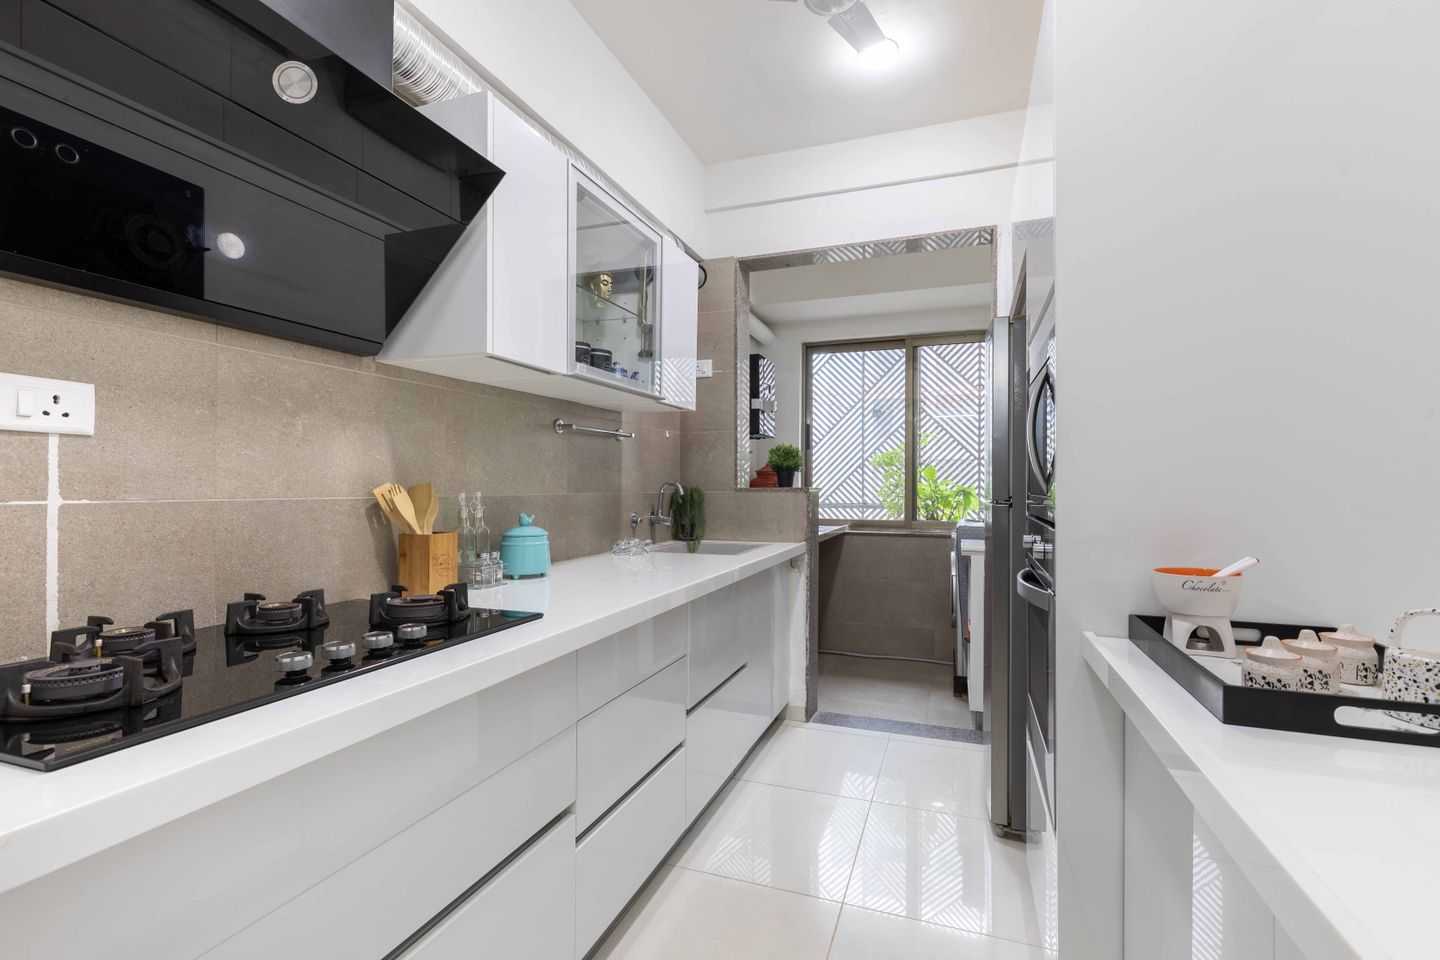 Modern Parallel Kitchen Design With Glossy White Flooring